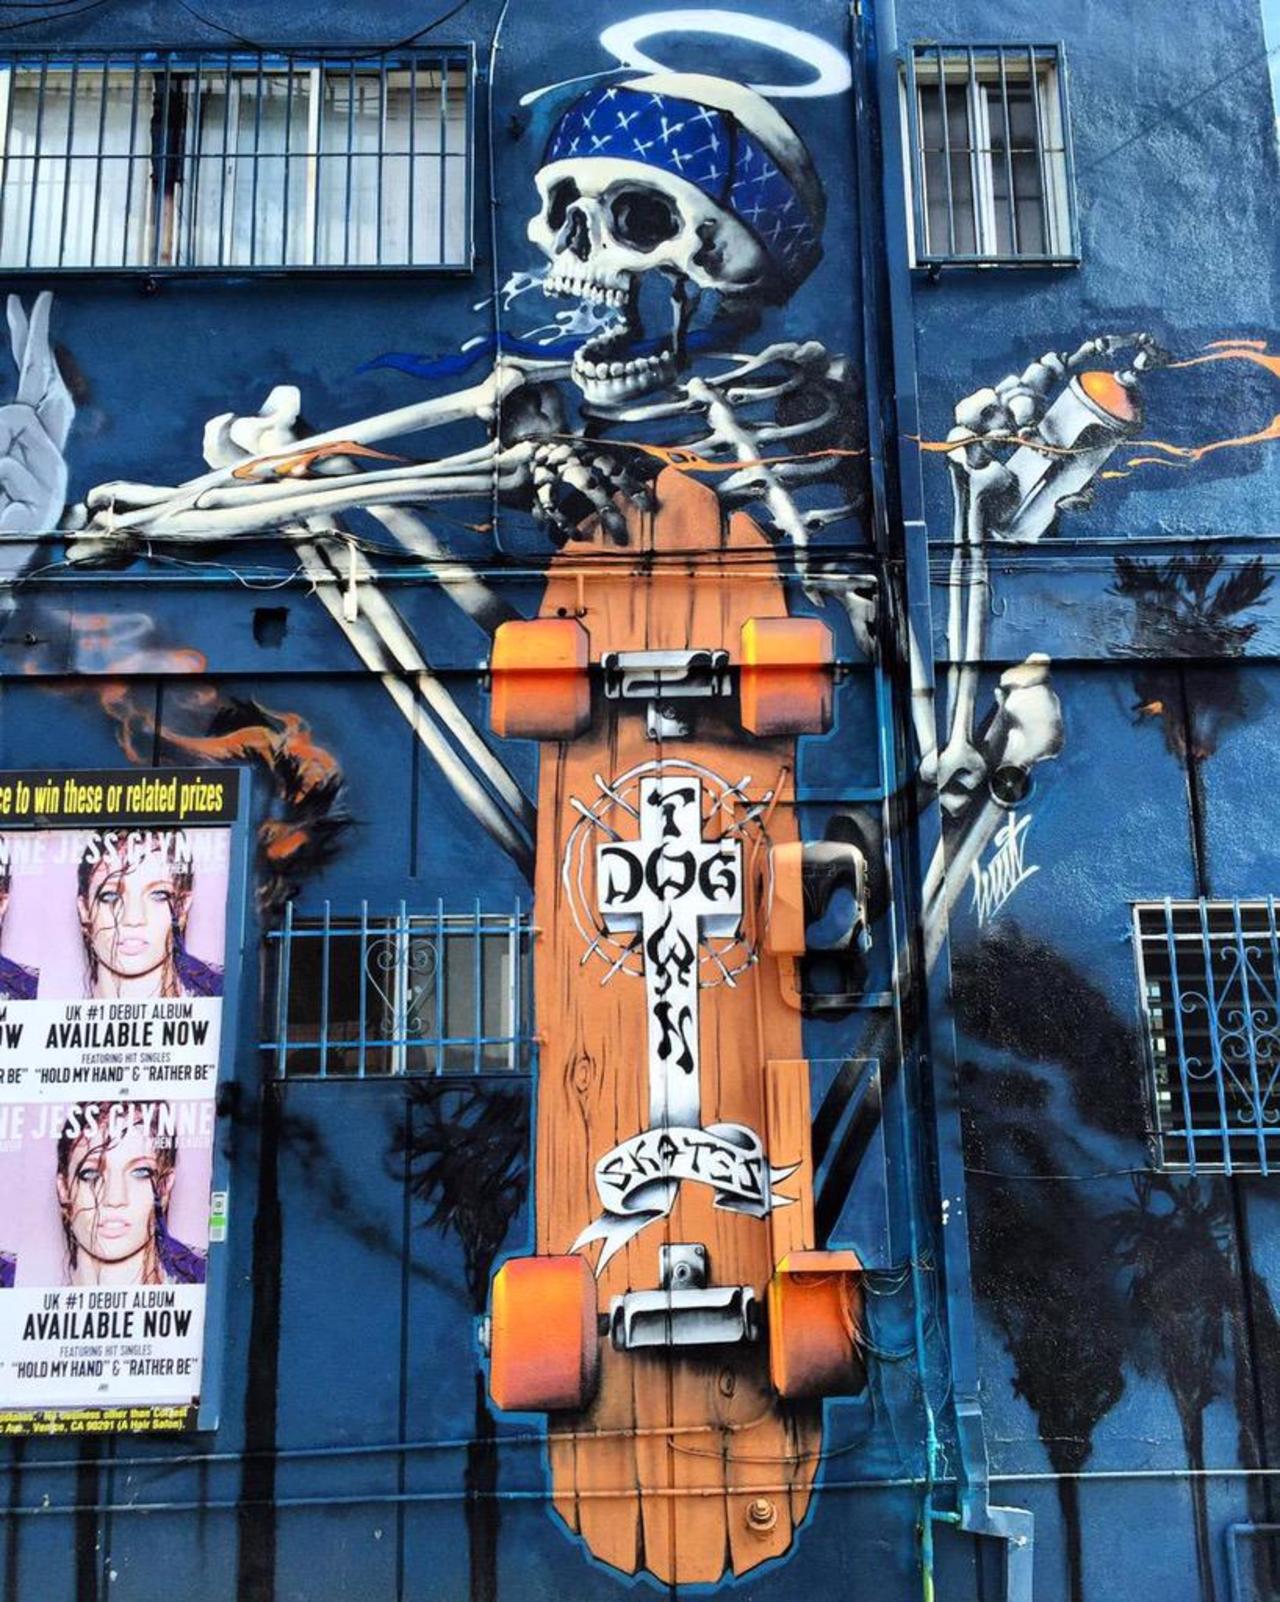 #streetart dogtown skates by #huit in #venice #LosAngeles  #bedifferent #graffiti #arte #art http://t.co/a1Ur0a5AV8